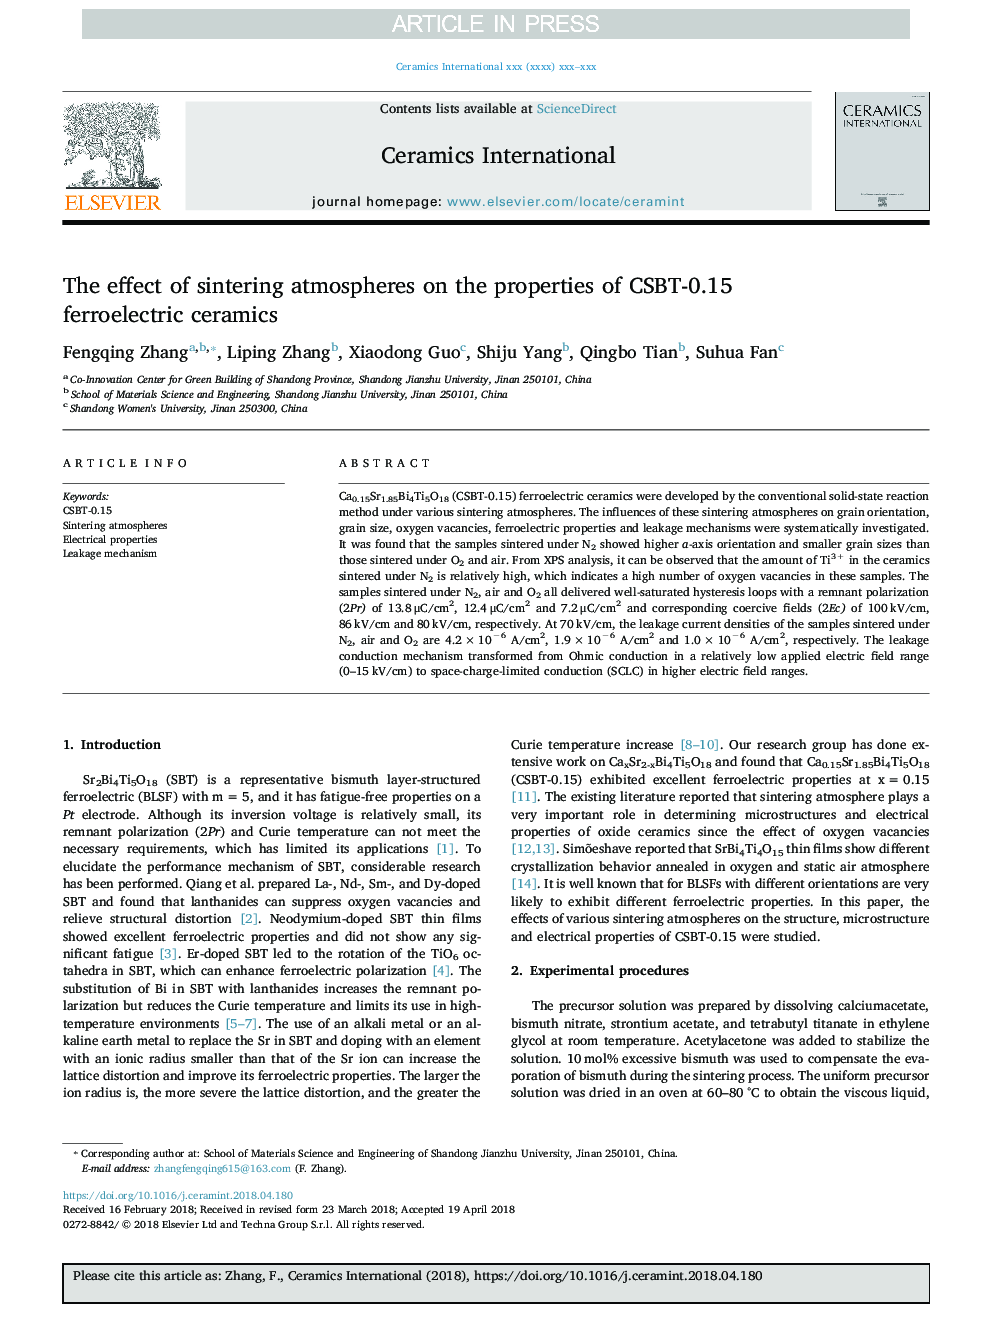 The effect of sintering atmospheres on the properties of CSBT-0.15 ferroelectric ceramics